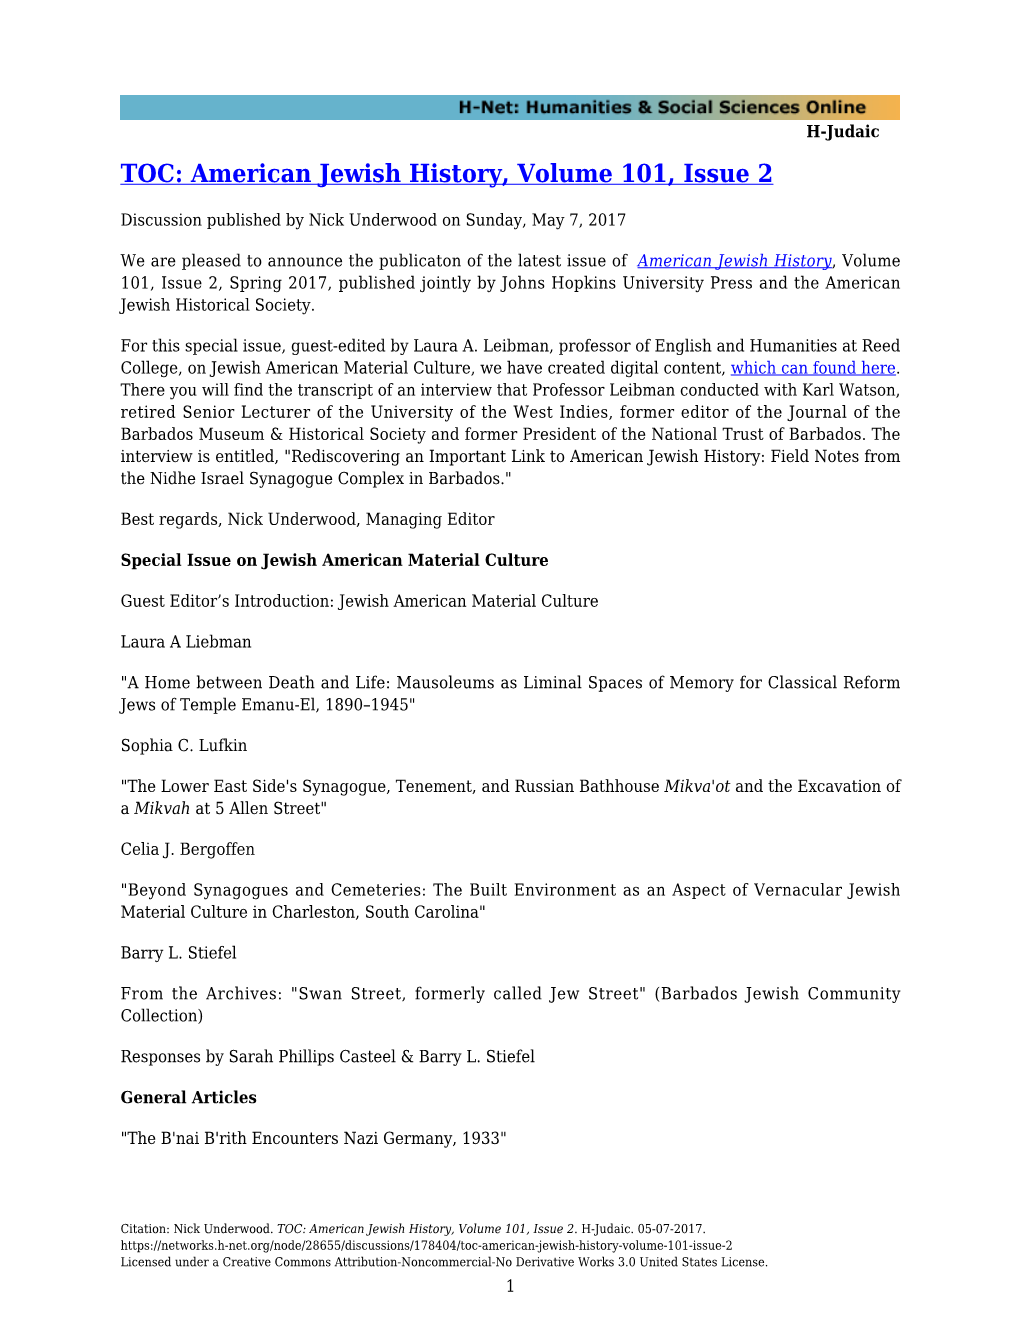 TOC: American Jewish History, Volume 101, Issue 2